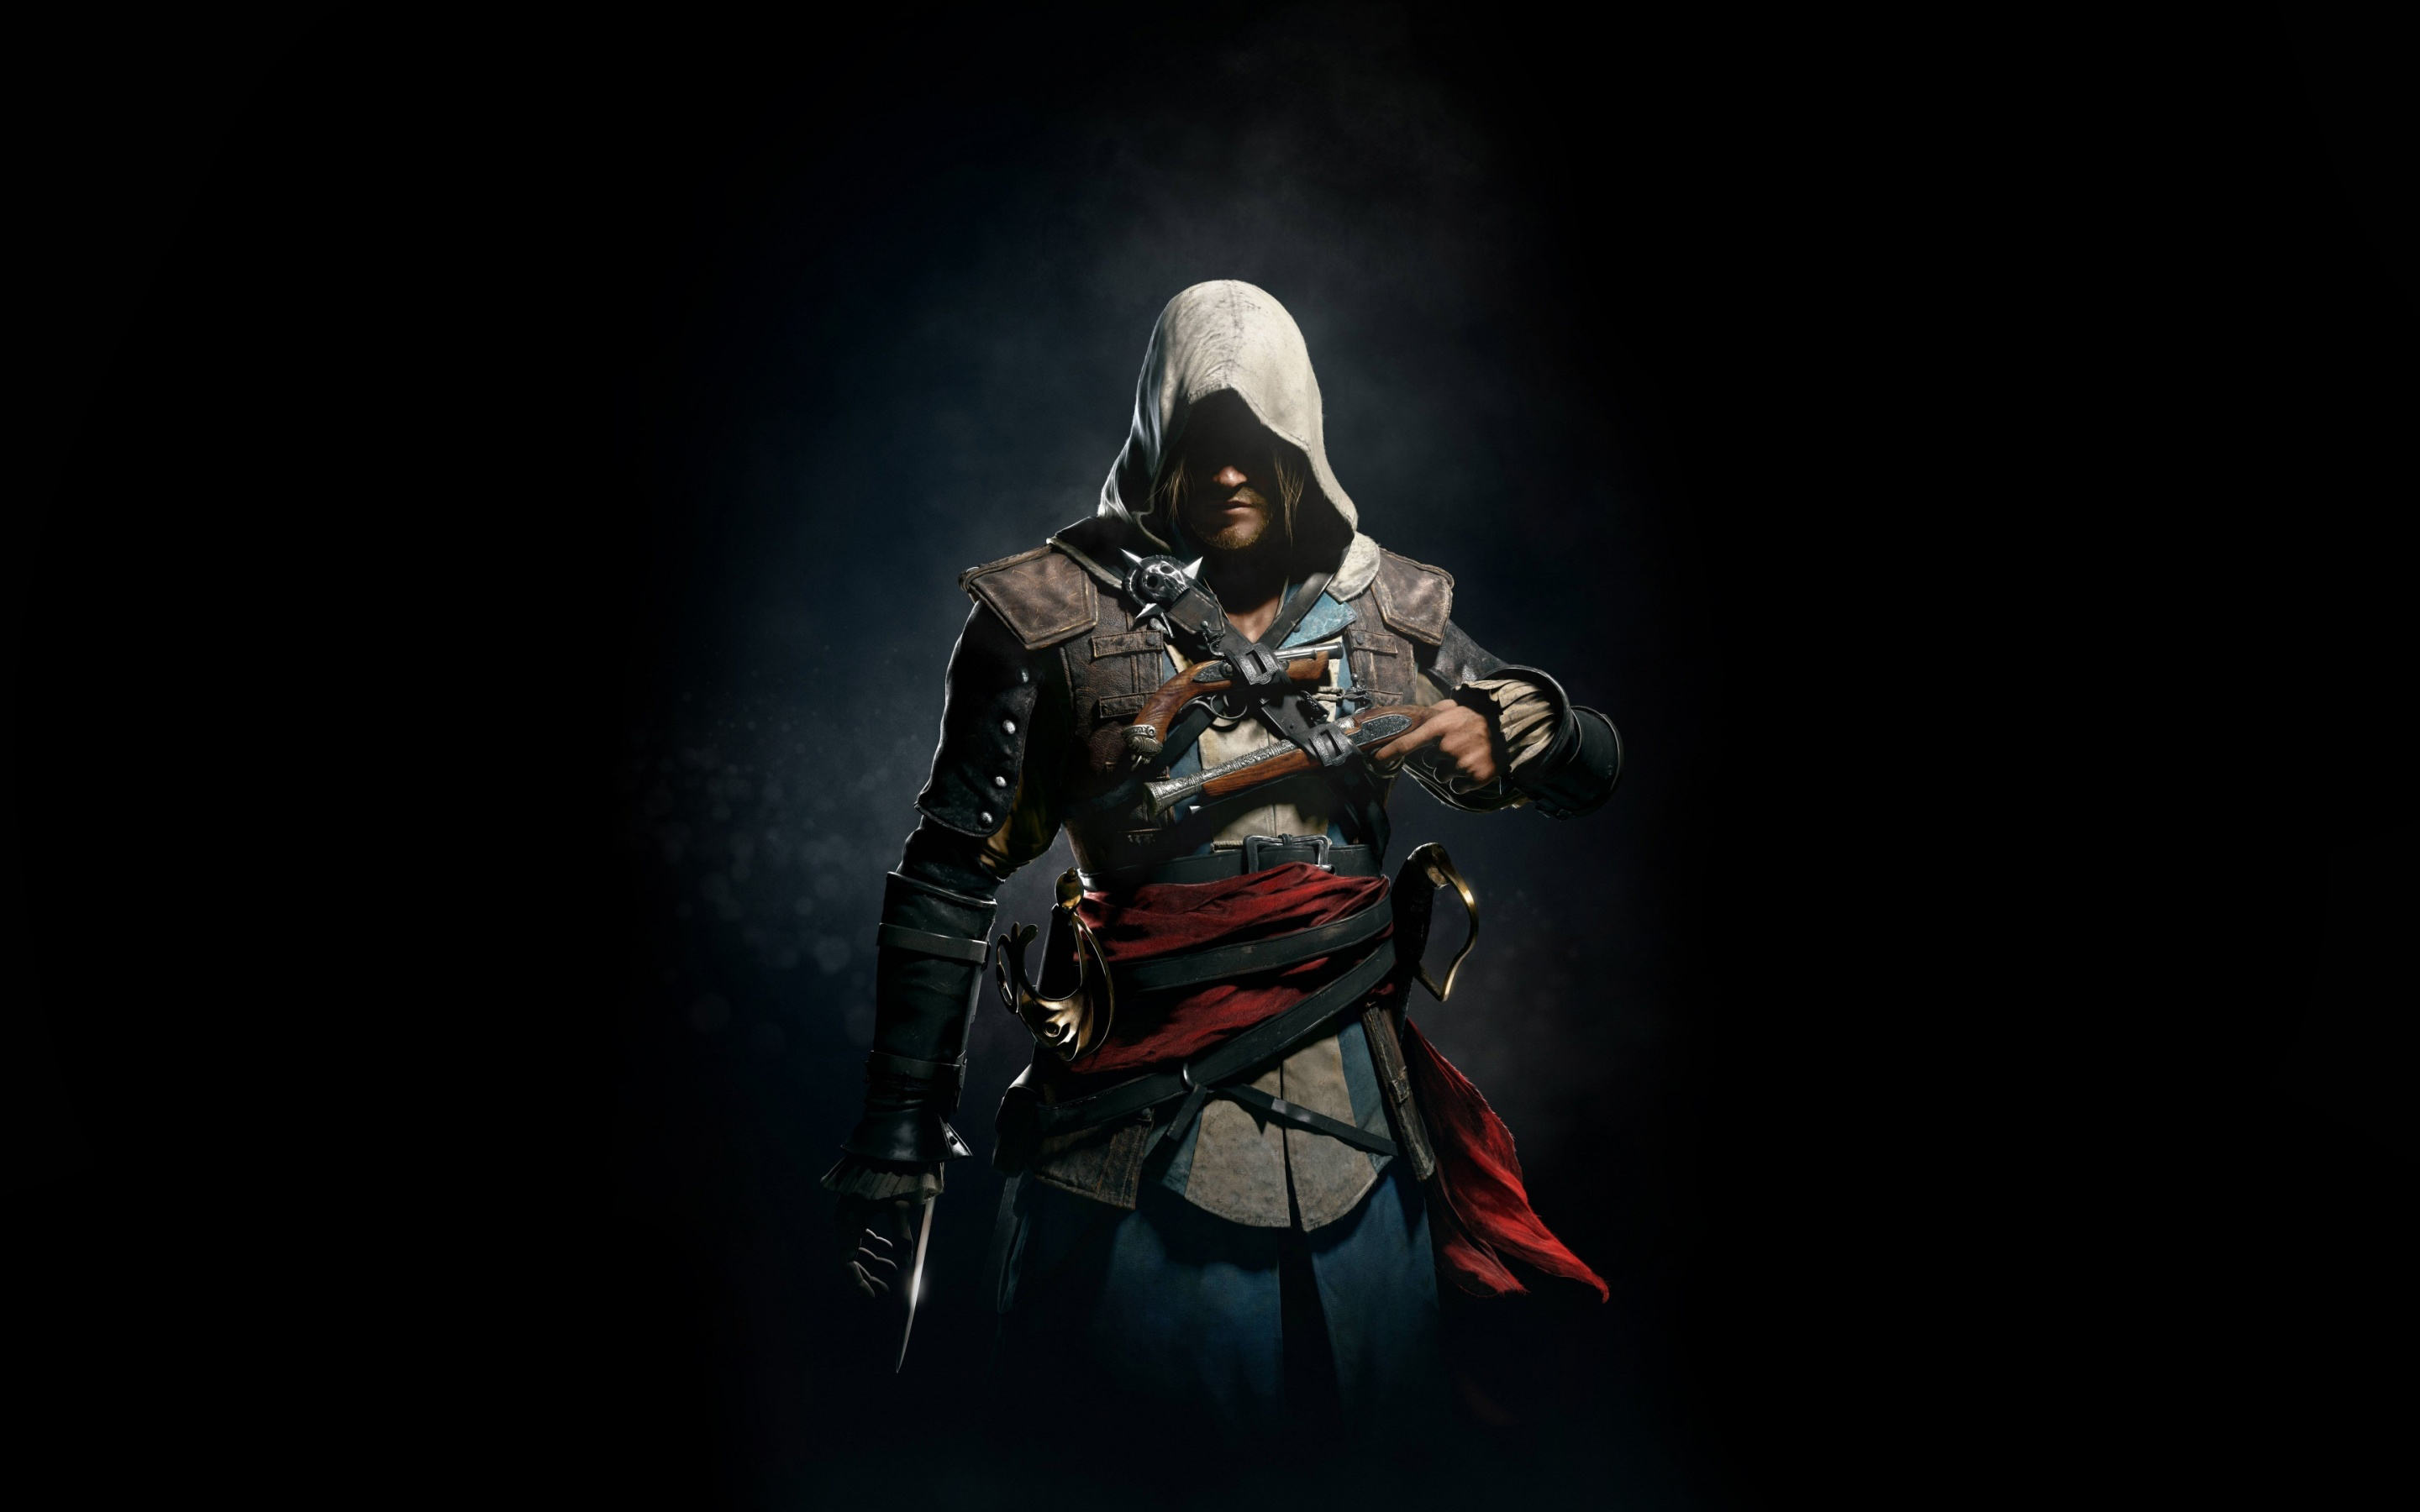 Скачать обои бесплатно Assassin's Creed Iv: Чёрный Флаг, Кредо Ассасина, Видеоигры картинка на рабочий стол ПК